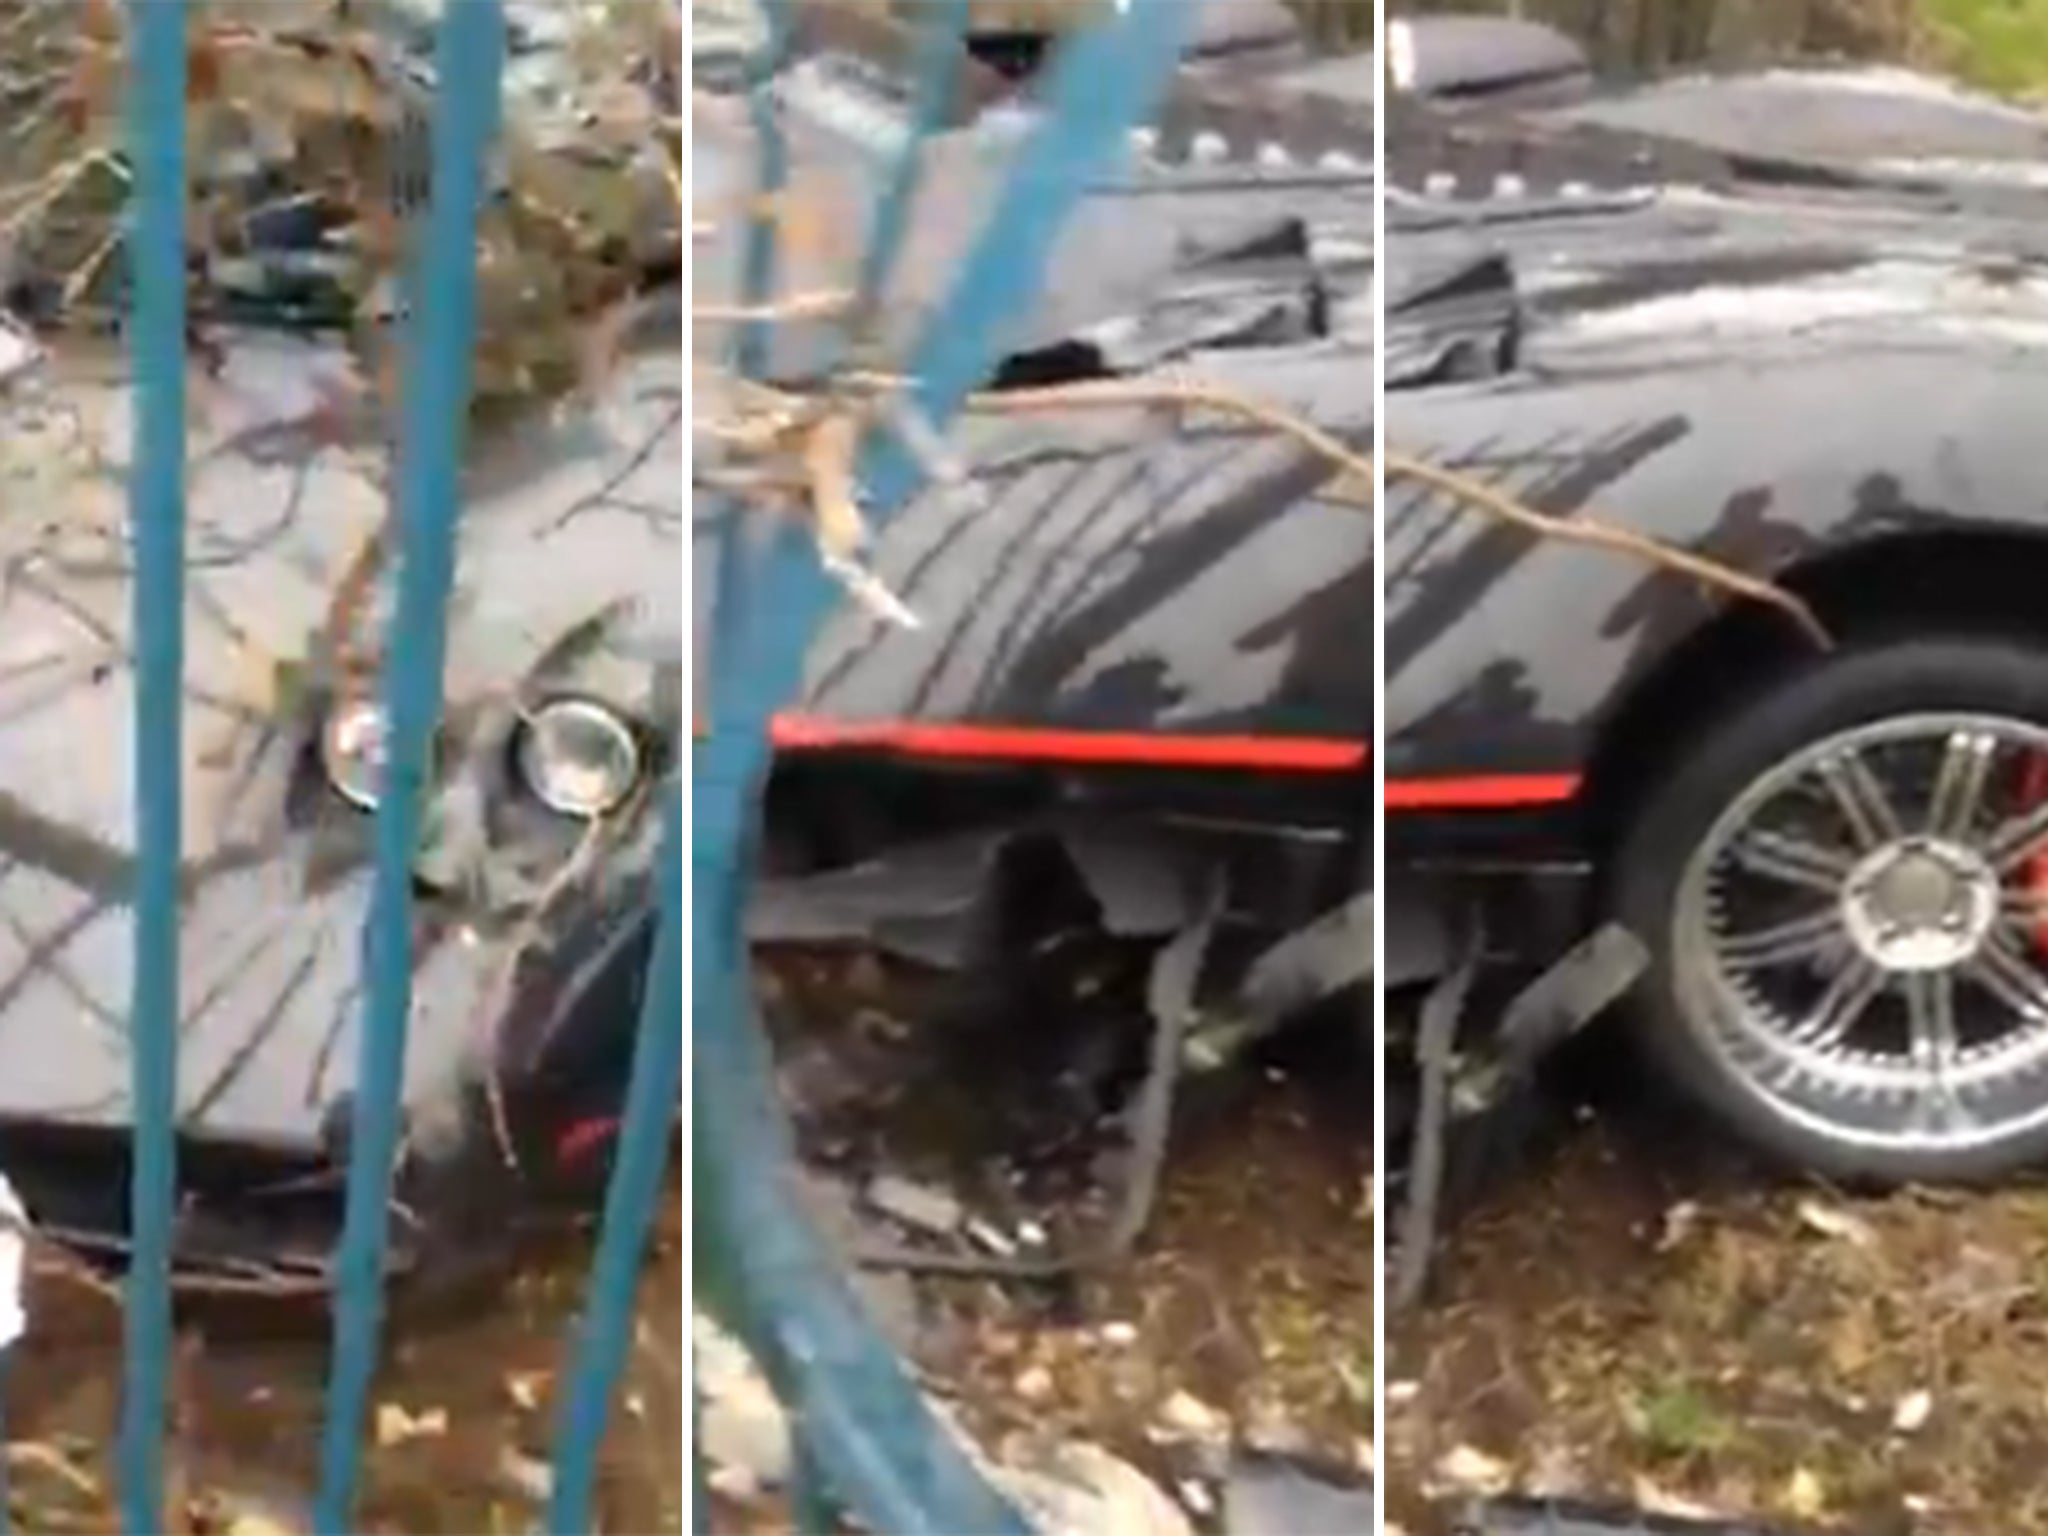 Video - $25-million Pagani Zonda crashes into Ford Fiesta